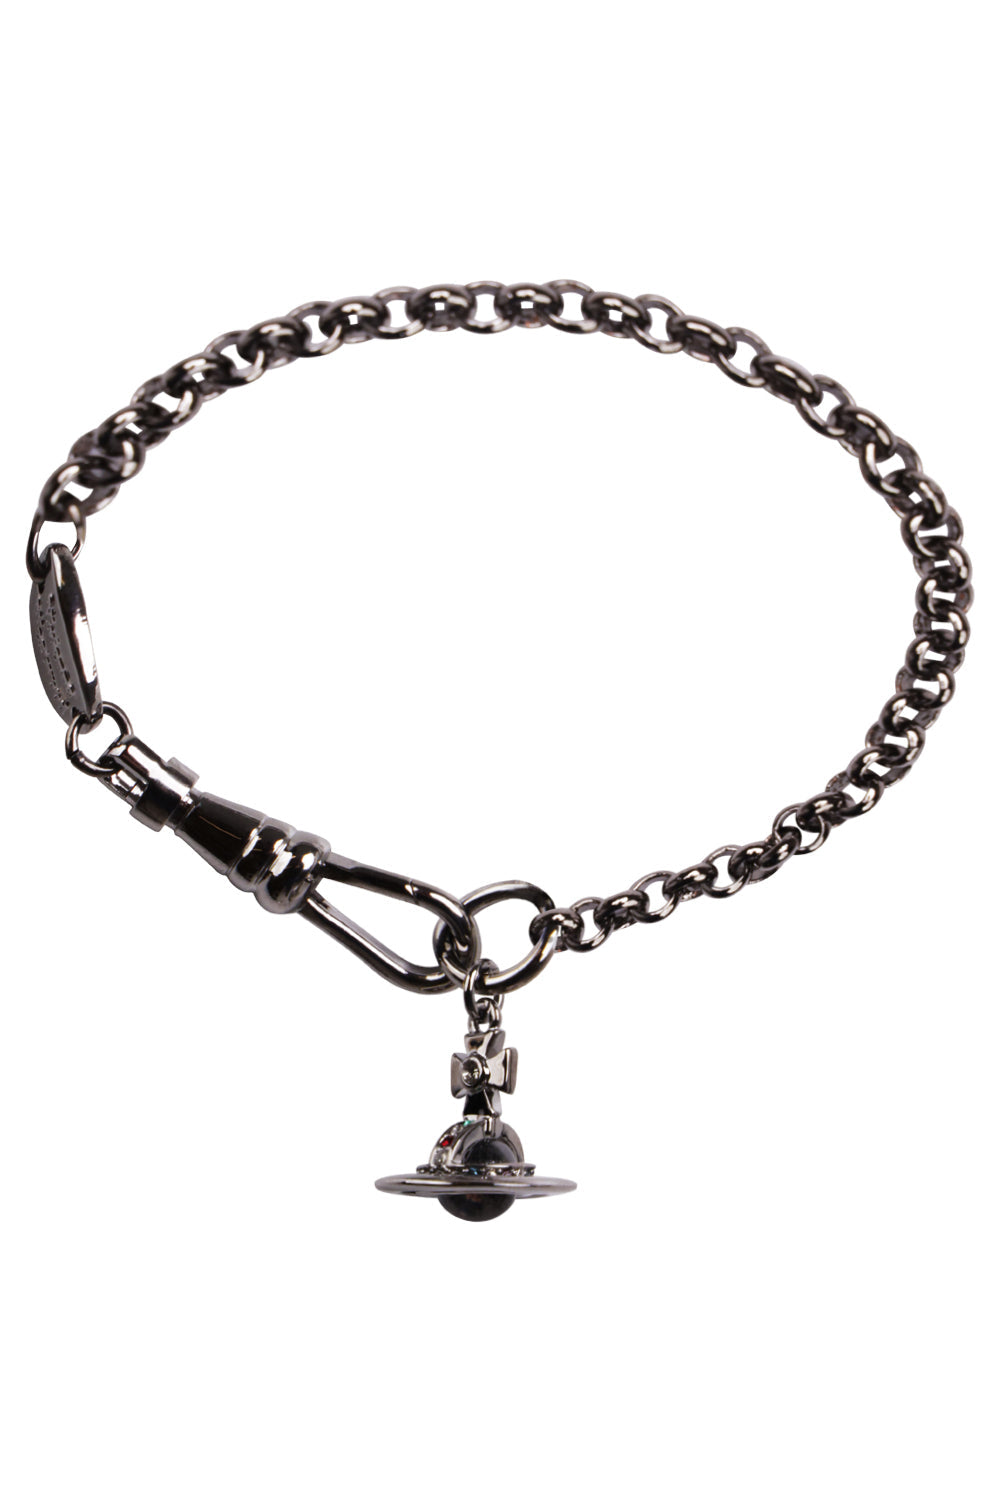 Vivienne Westwood New Petite Orb Bracelet